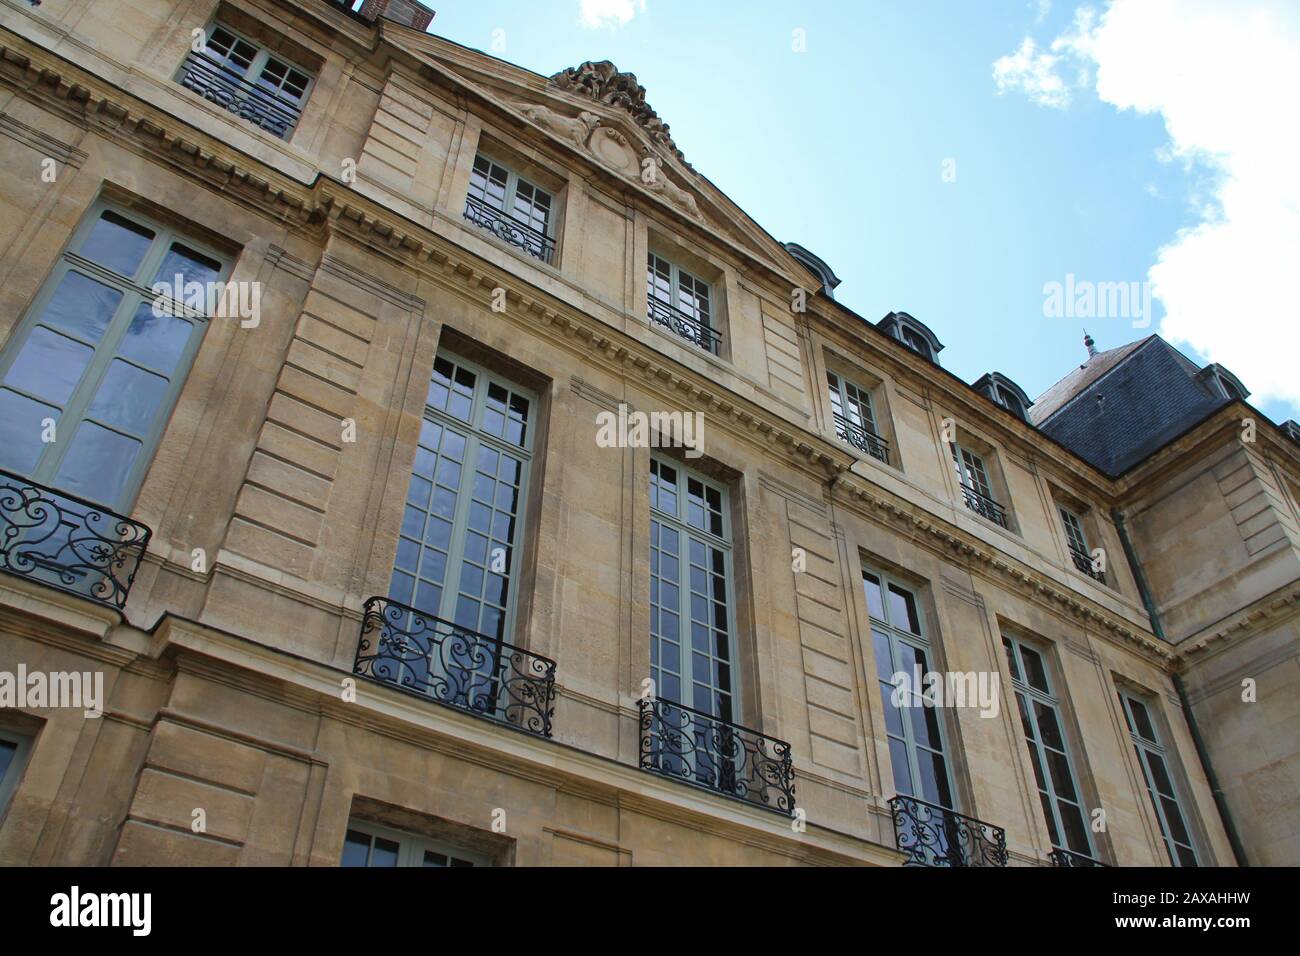 mansión salé en parís (francia) Foto de stock